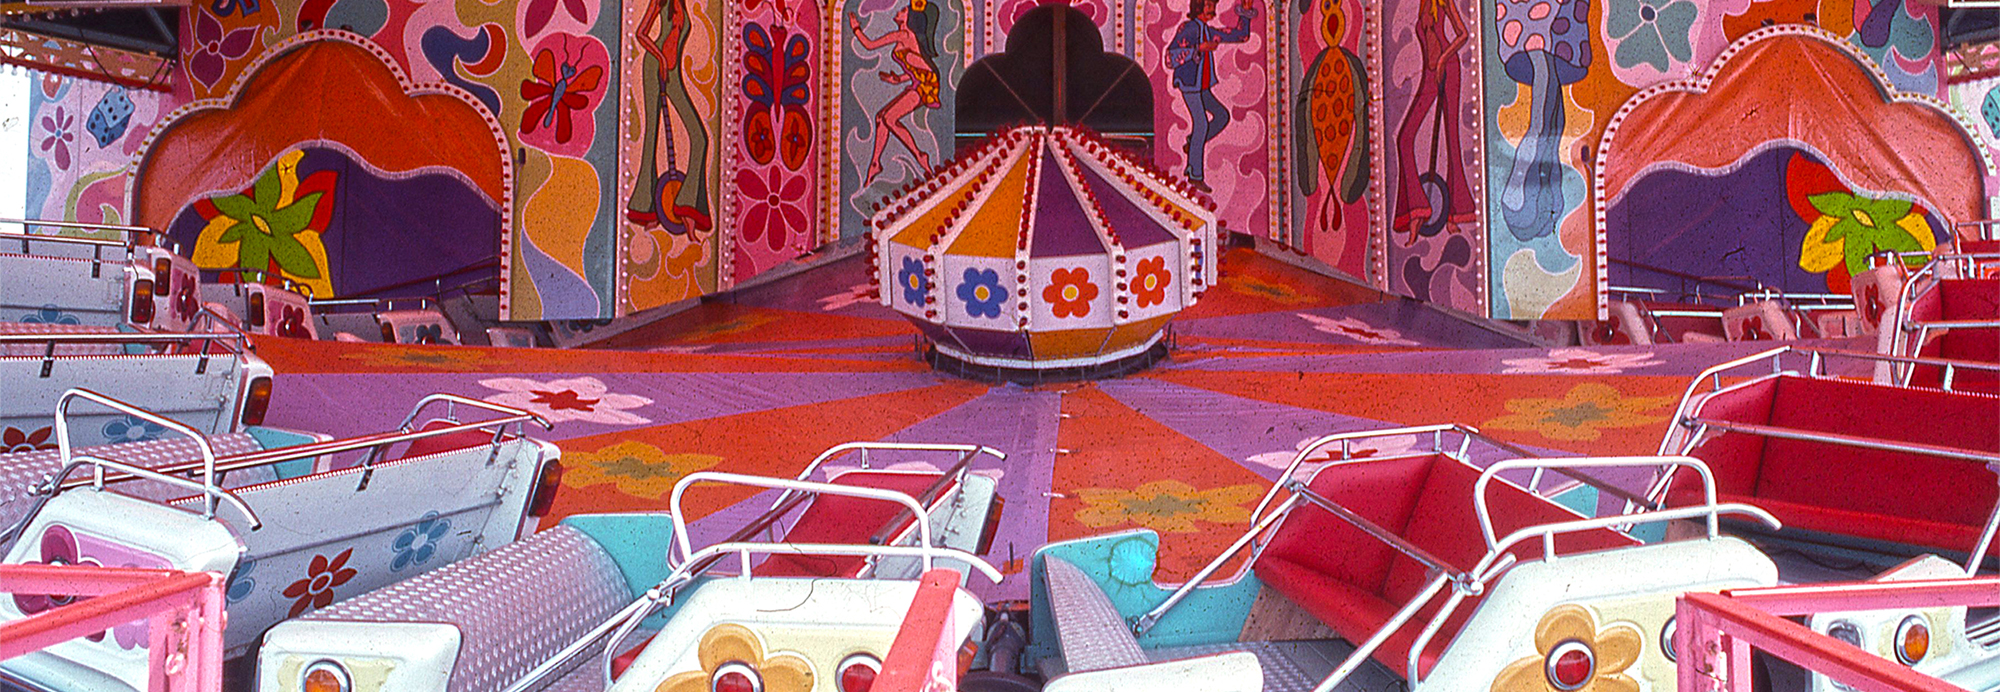 jolly roger amusement park ticket booth